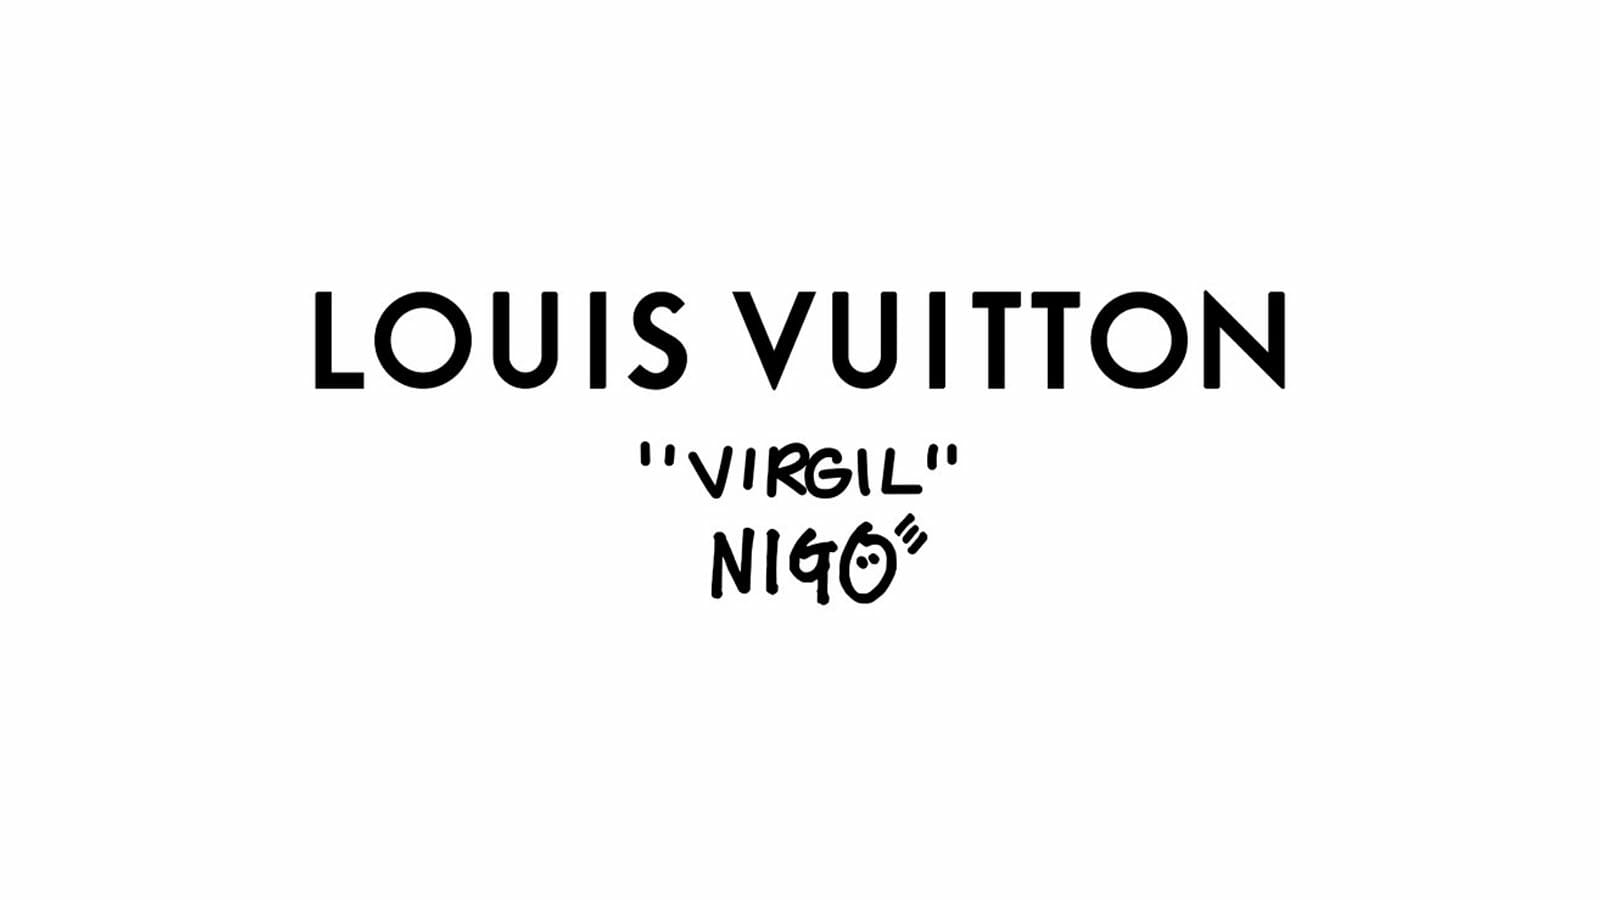 Get a Closer Look at the Louis Vuitton x Virgil Abloh x NIGO Collection ...